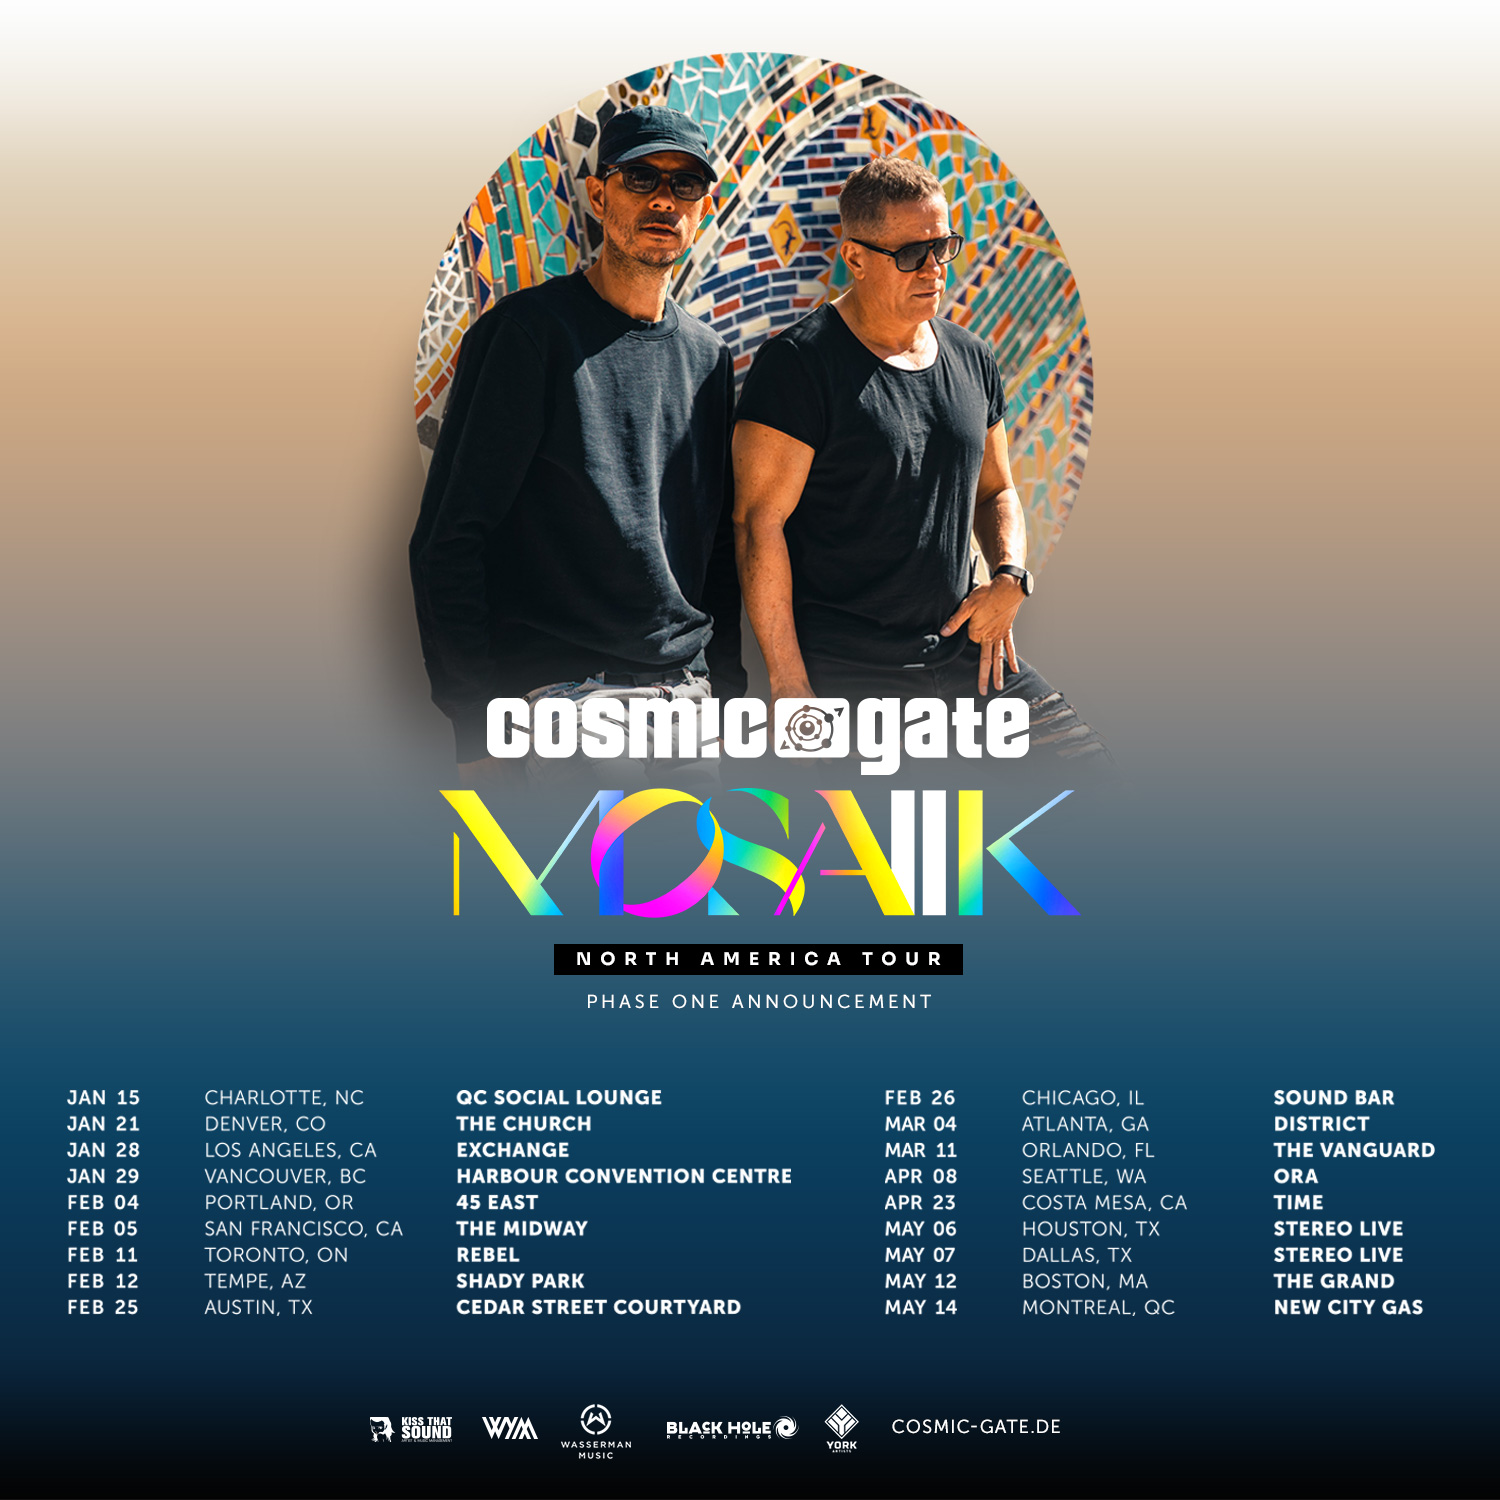 Cosmic Gate North American MOSAIIK ALBUM tour coming January 2022